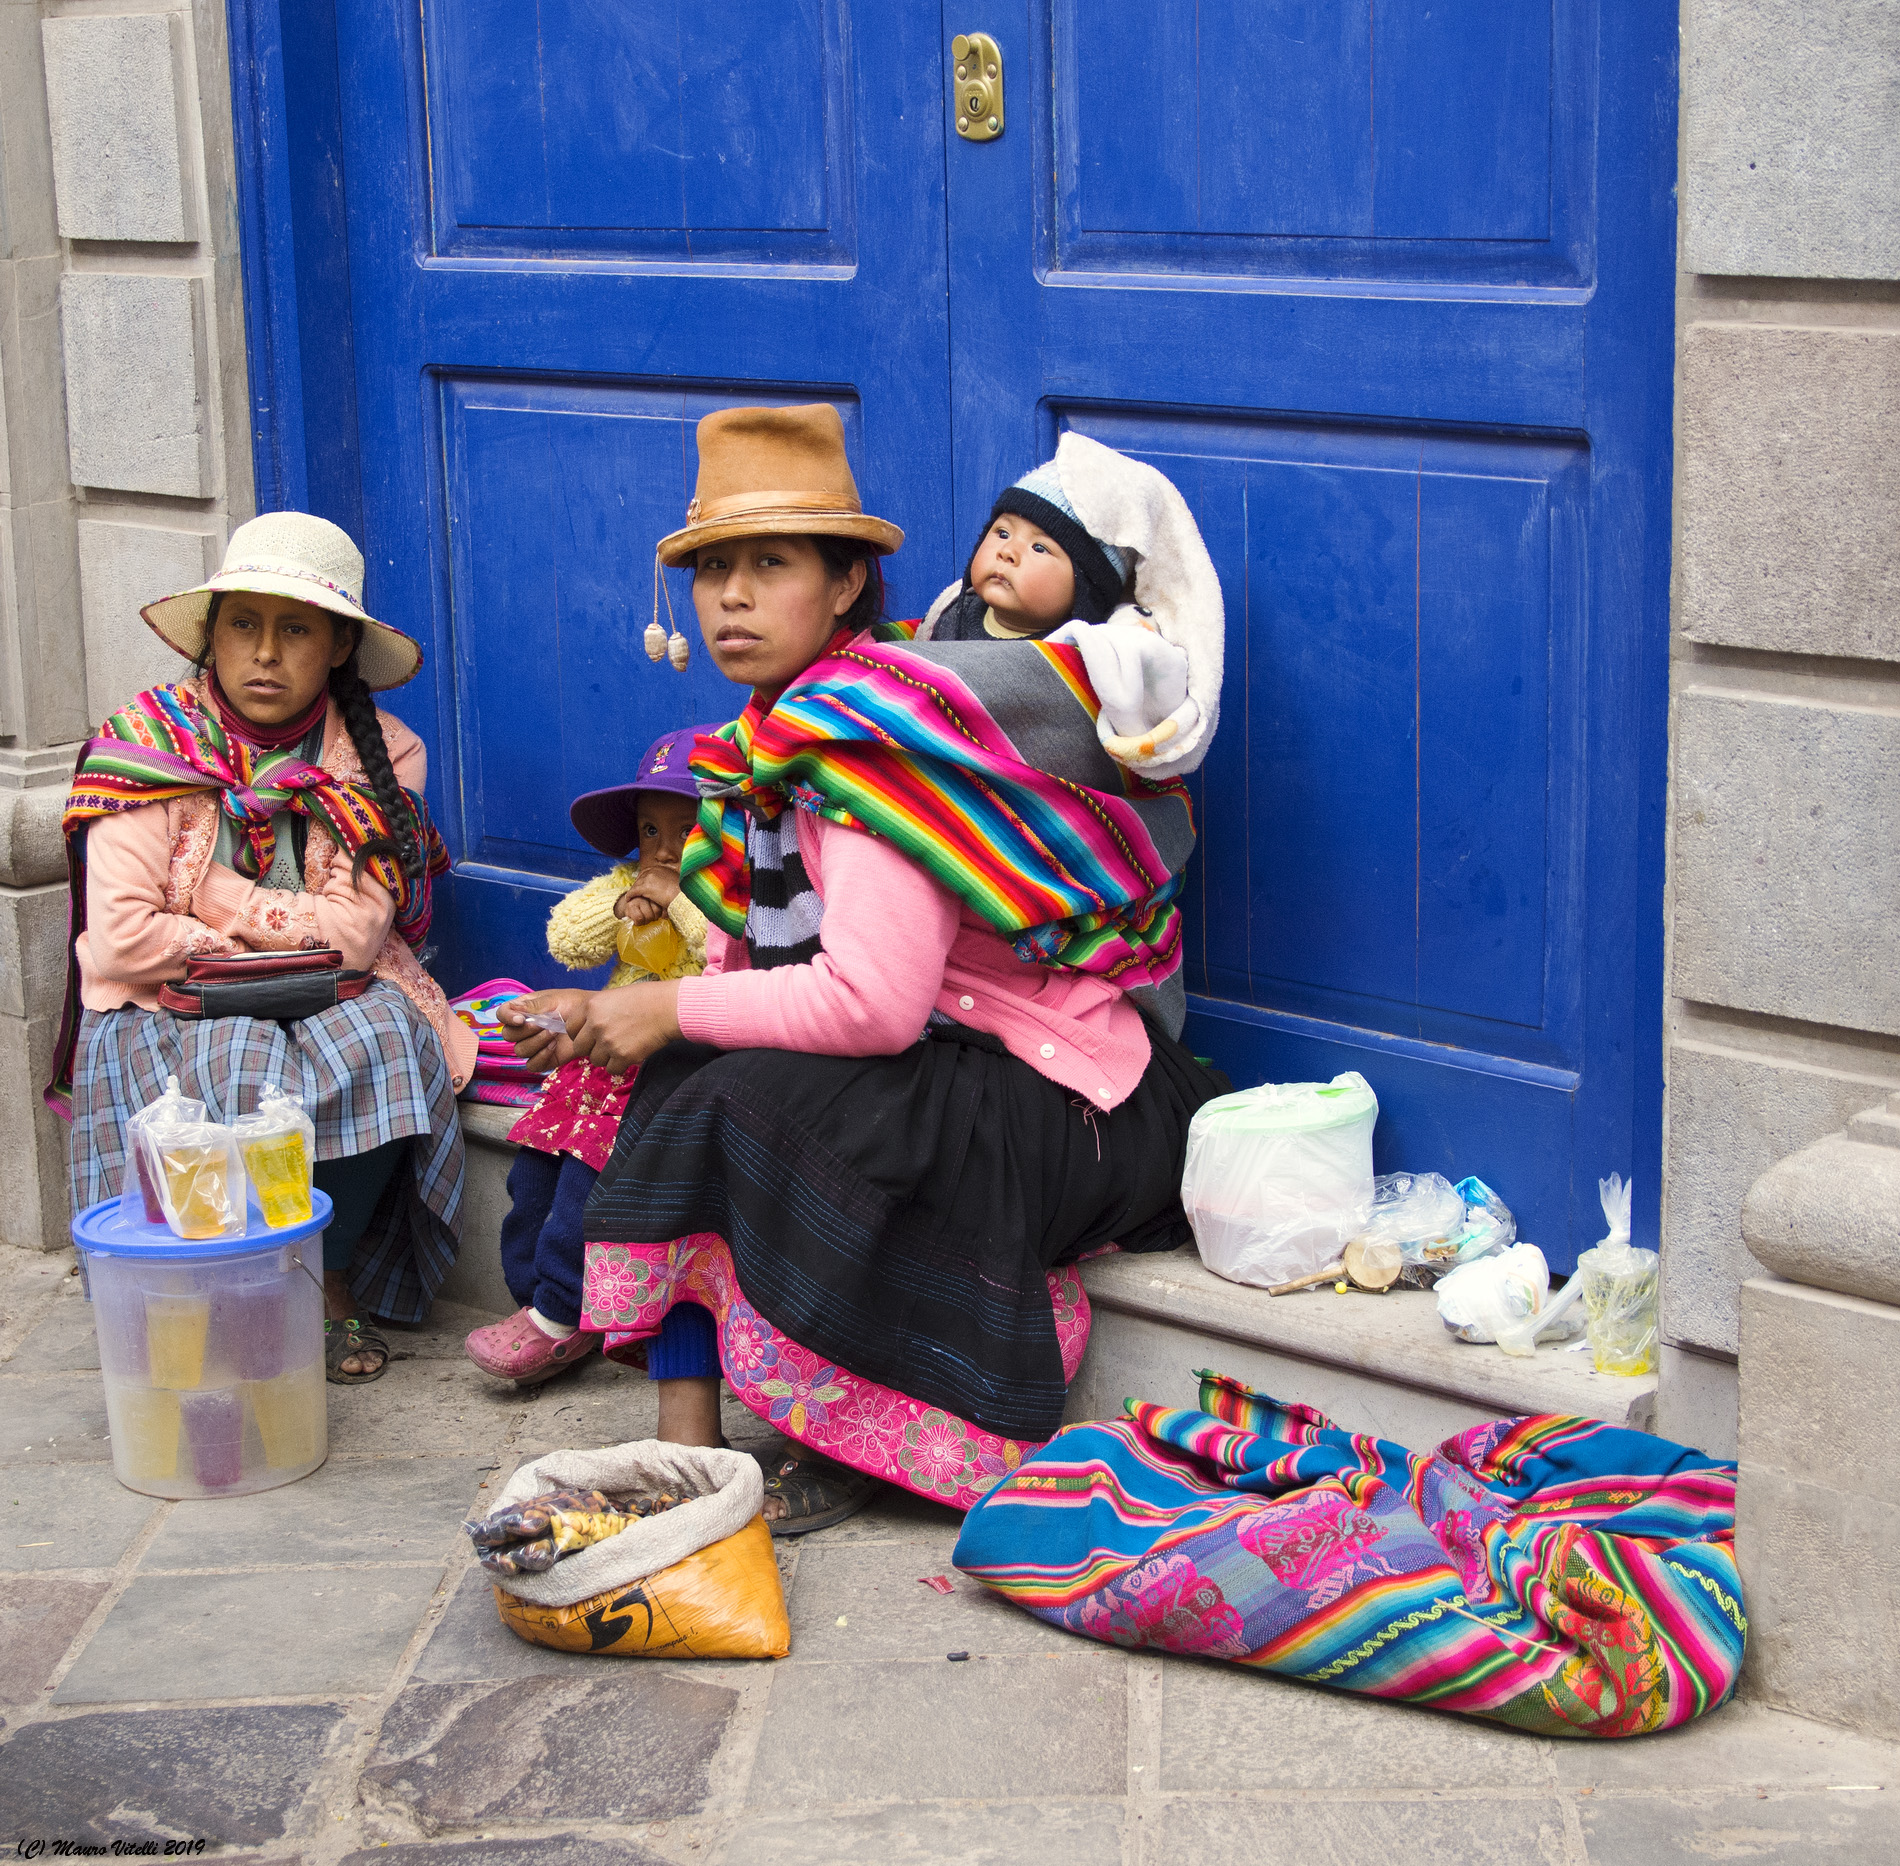 Walking through the streets of Cuzco (Peru)...